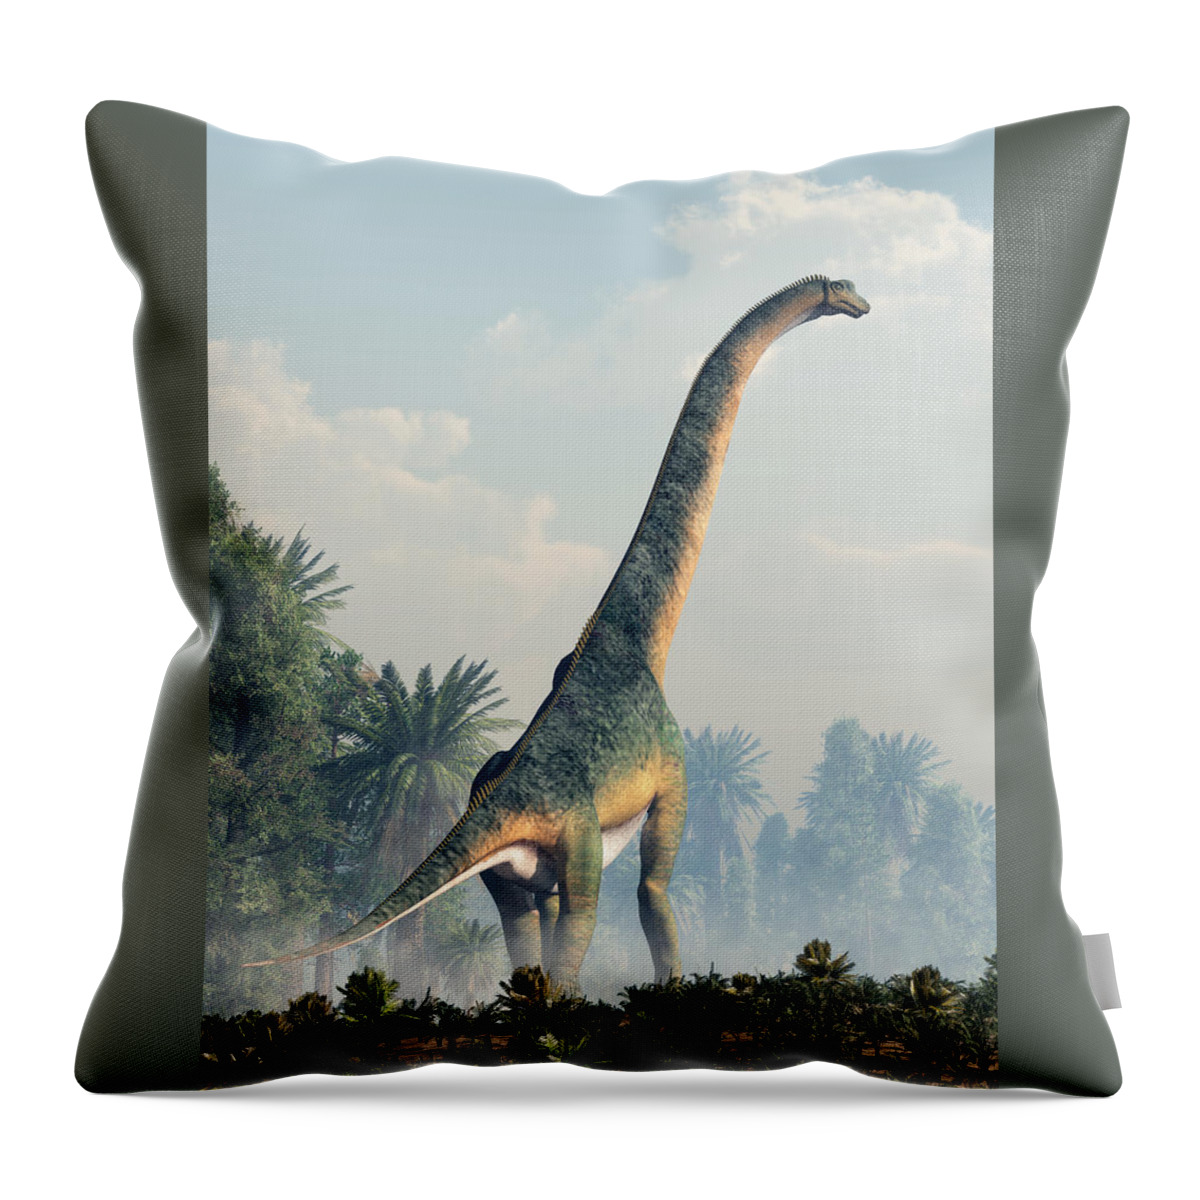 Brachiosaurus Throw Pillow featuring the digital art Giant Sauropod Walking Away by Daniel Eskridge